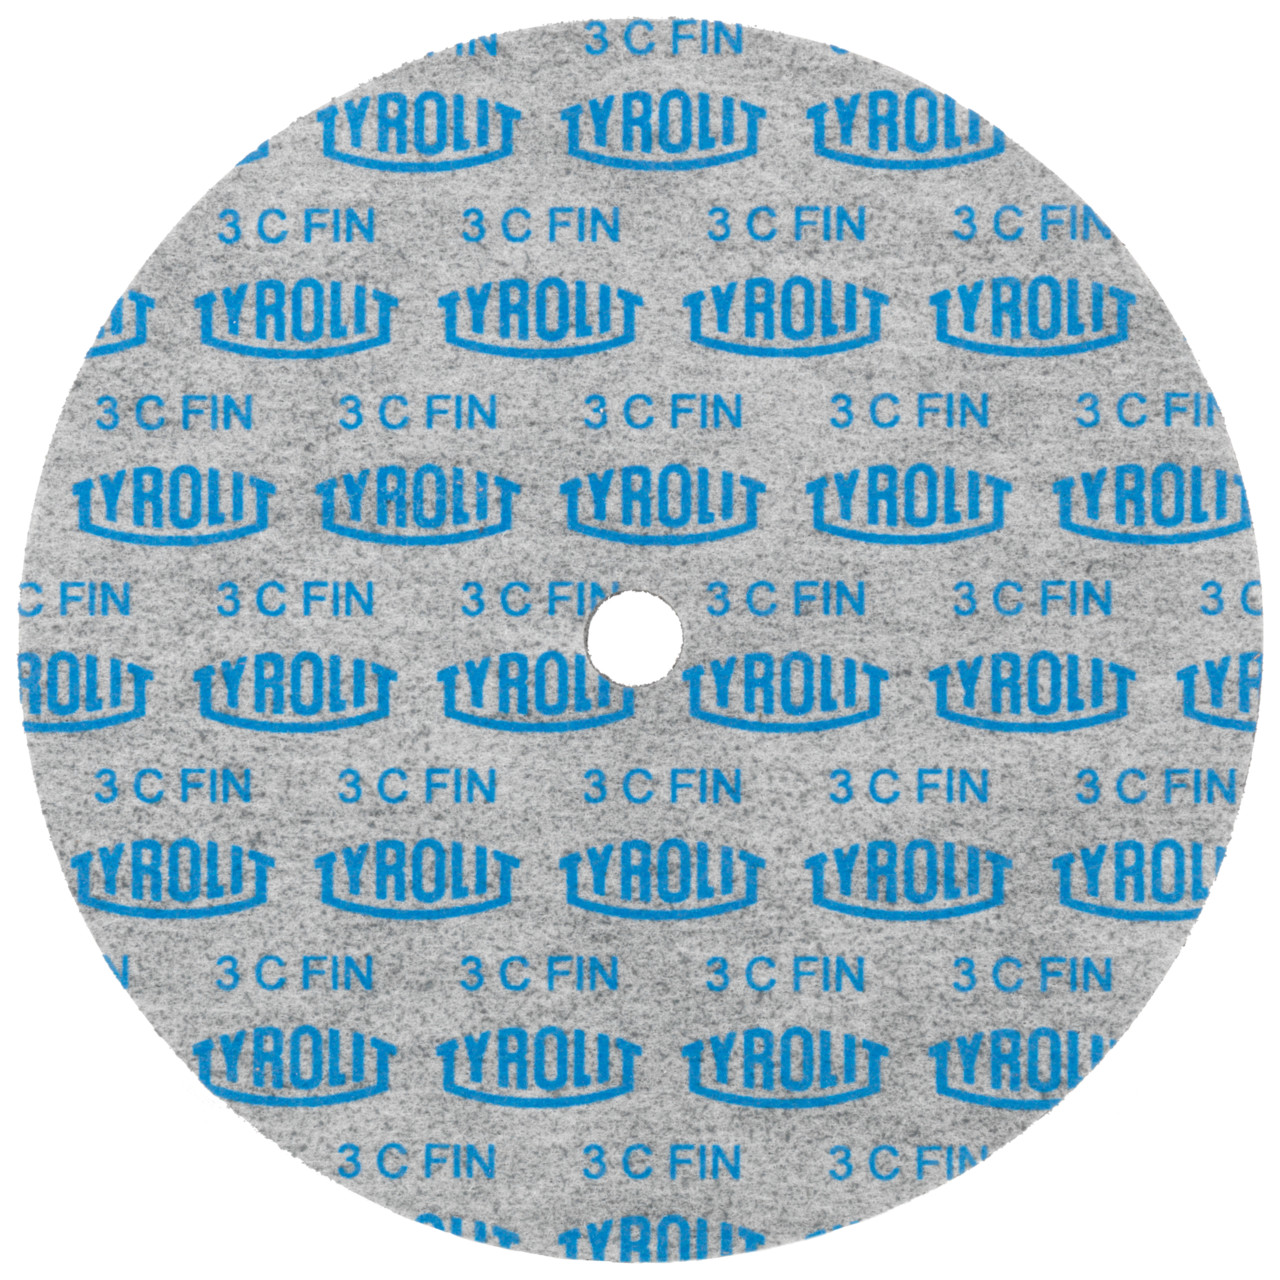 Tyrolit Discos compactos prensados DxDxH 152x13x12,7 Inserto universal, 6 C FEIN, forma: 1, Art. 34190294